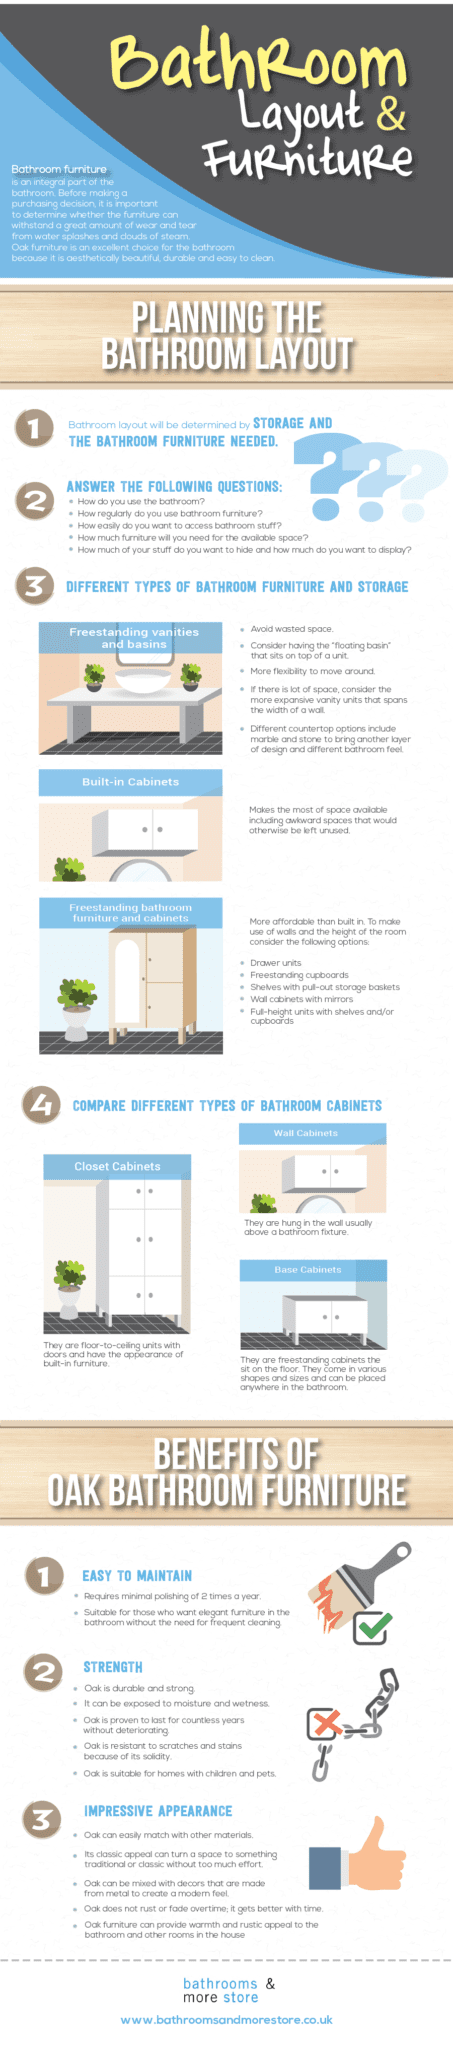 Bathroom Furniture Planning Infographic